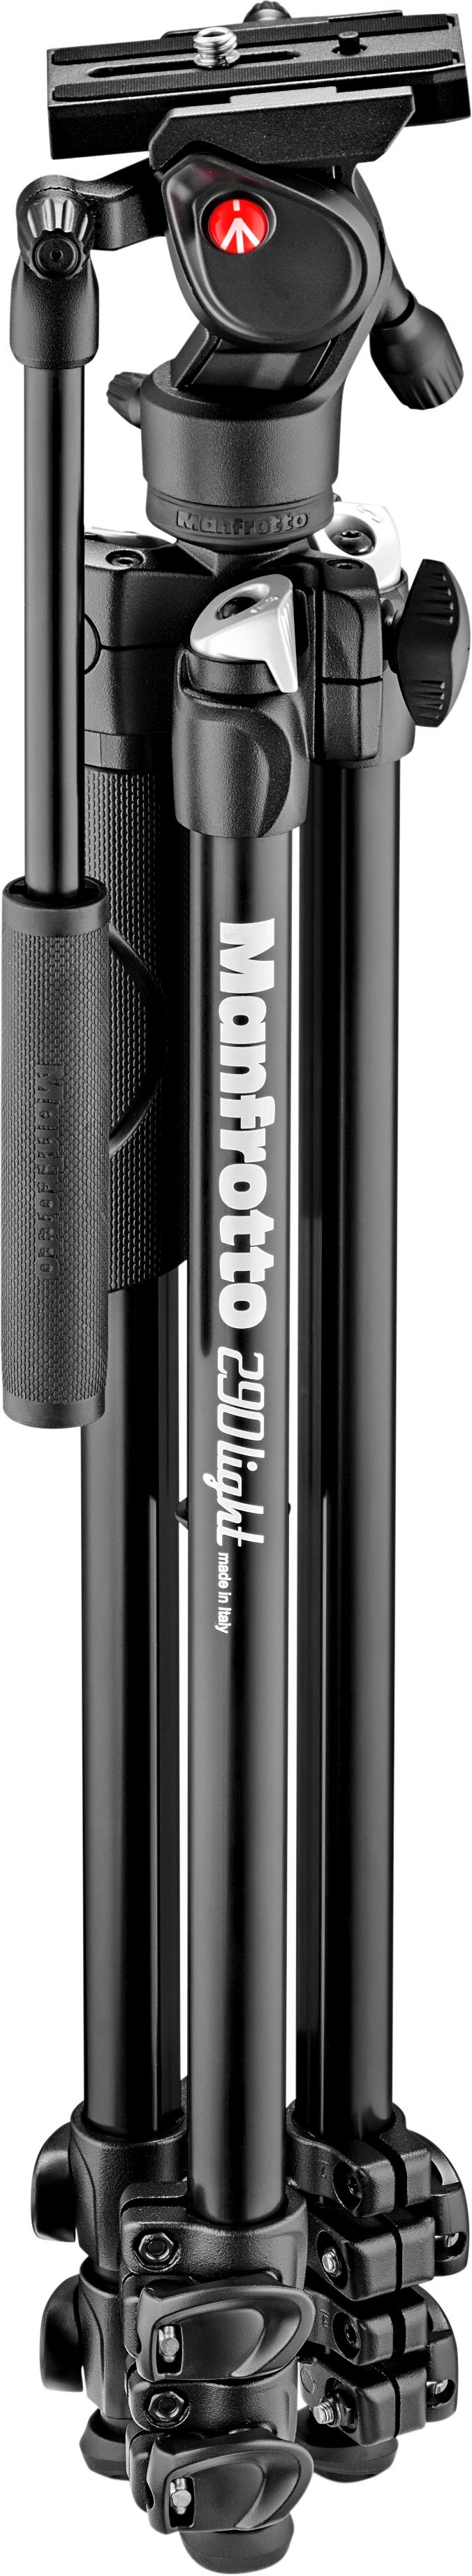 Manfrotto 290 Tripod with Fluid Head MK290LTA3-VUS Best Buy